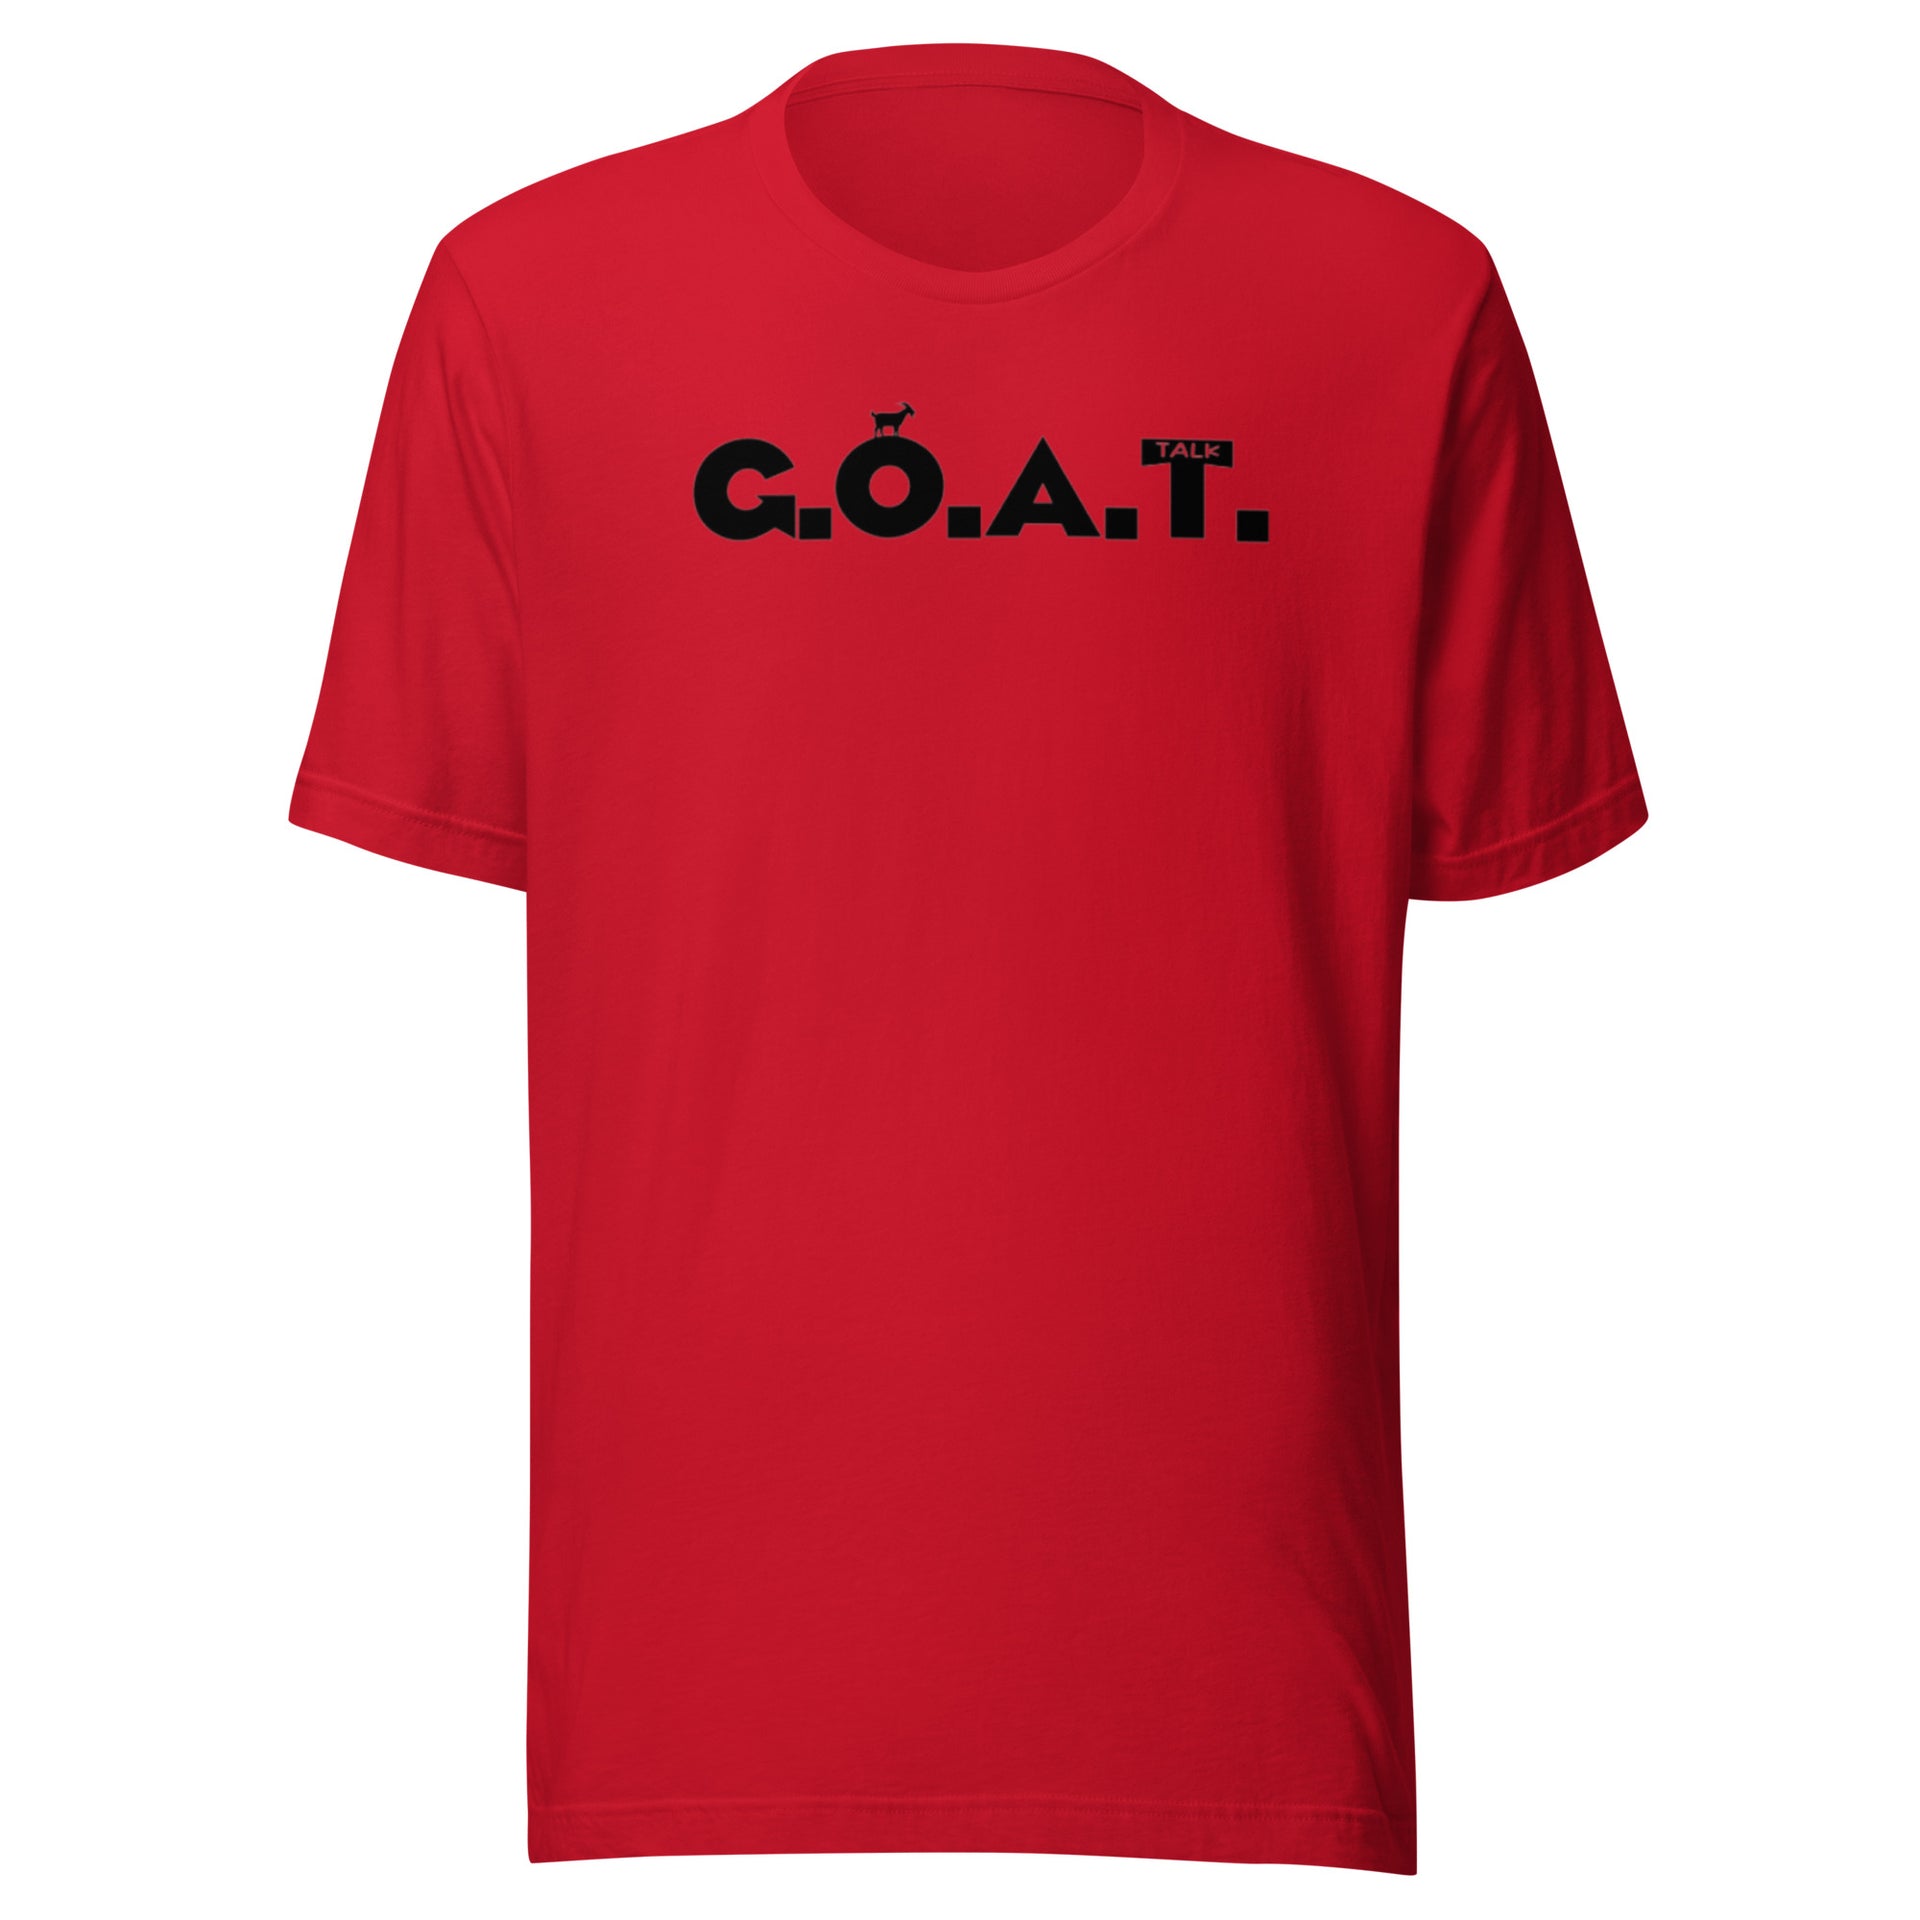 Billy Goat / Bock / Bouc / Macho Cabrío / Becco /' Men's T-Shirt